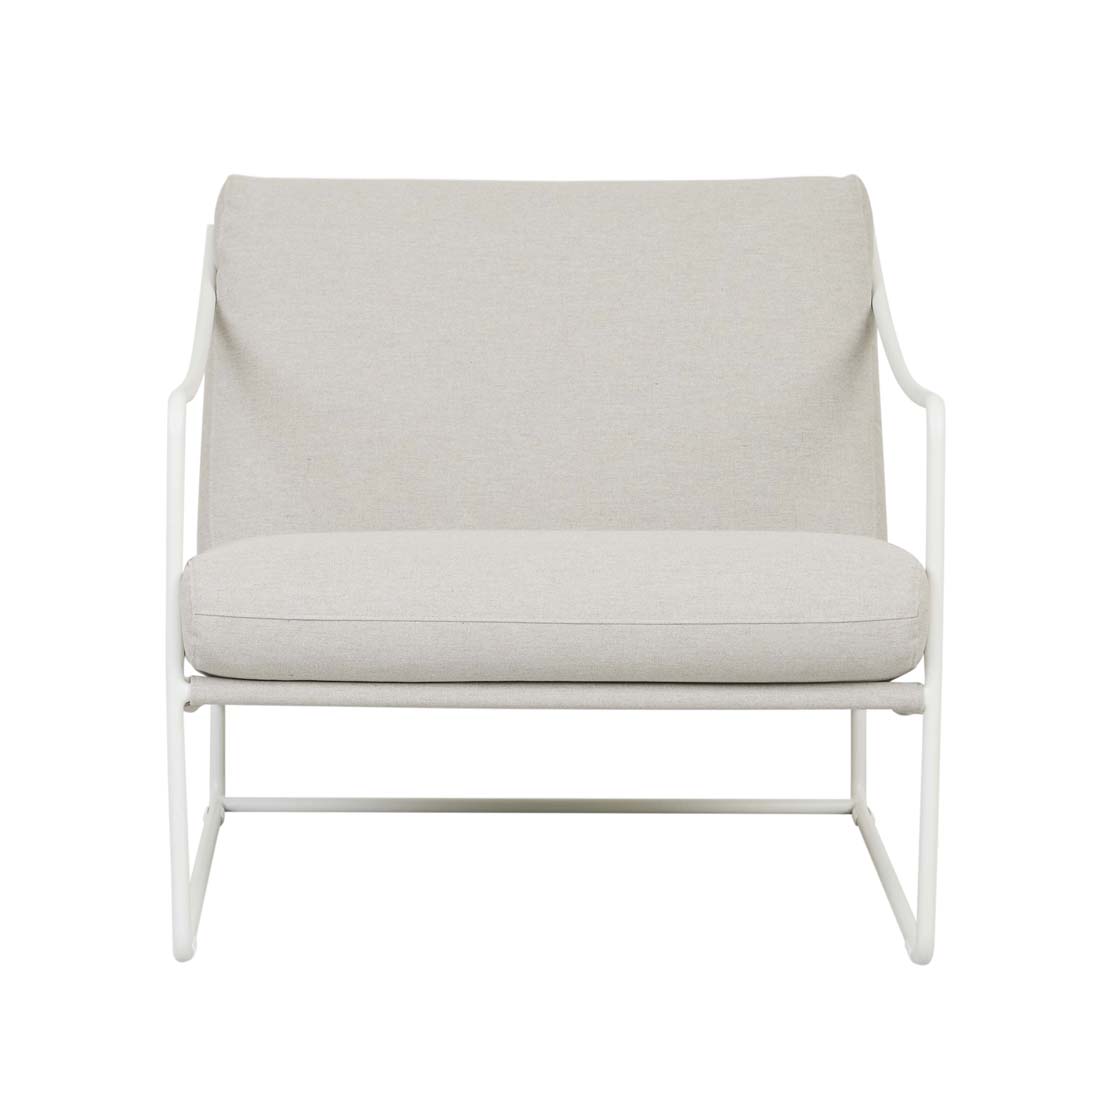 Allegra Outdoor Sofa Chair image 35